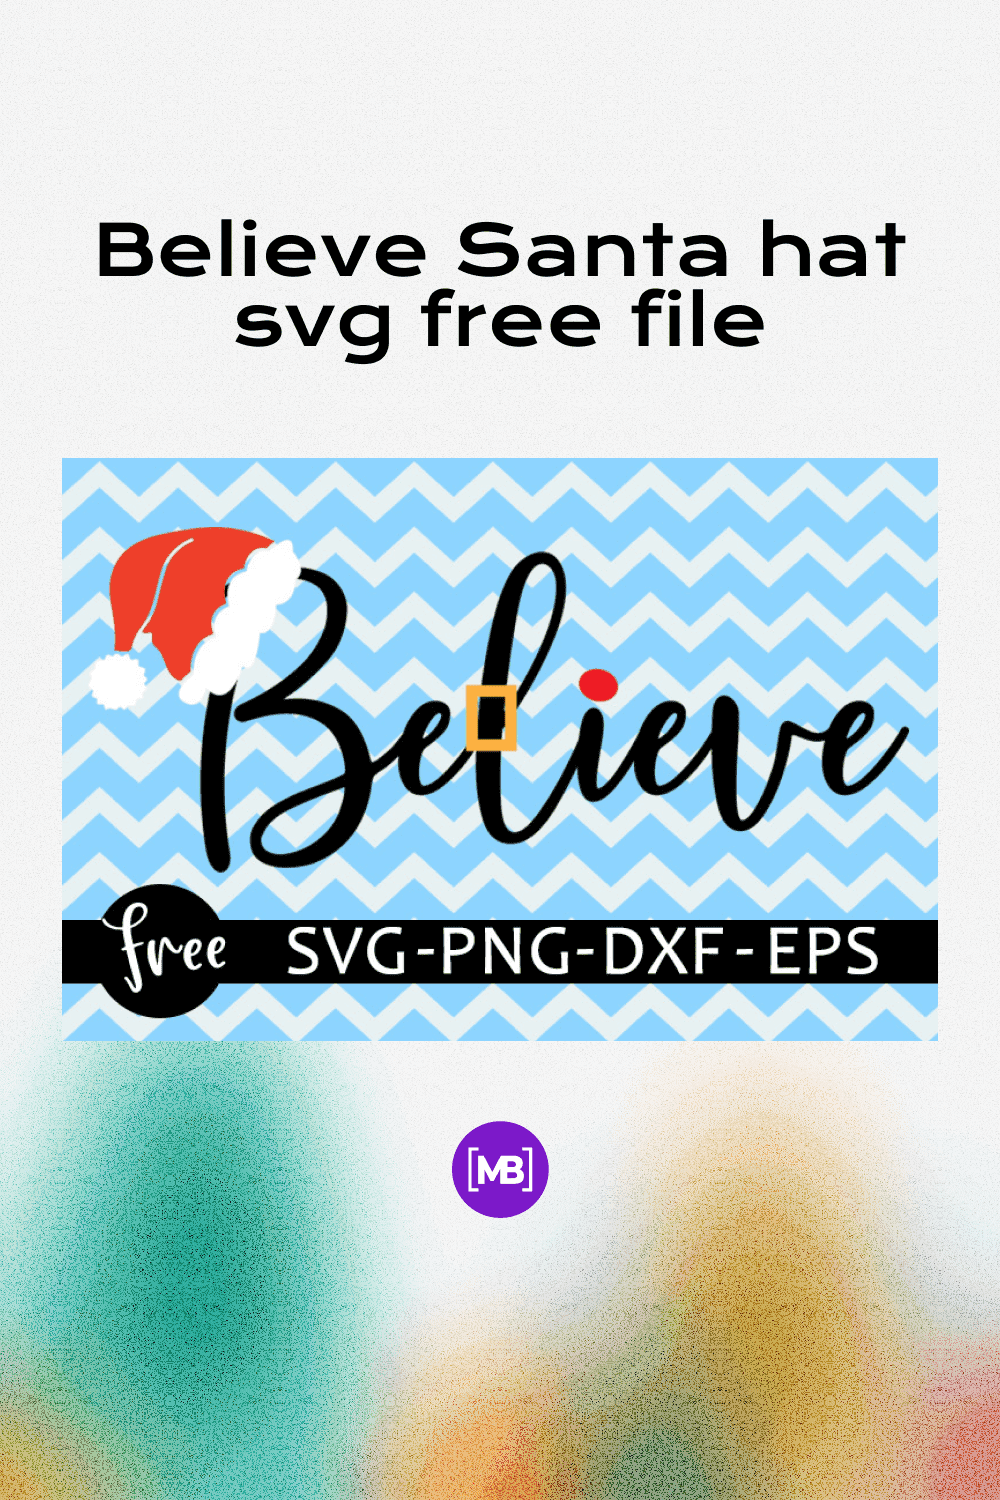 Believe Santa hat svg free file.